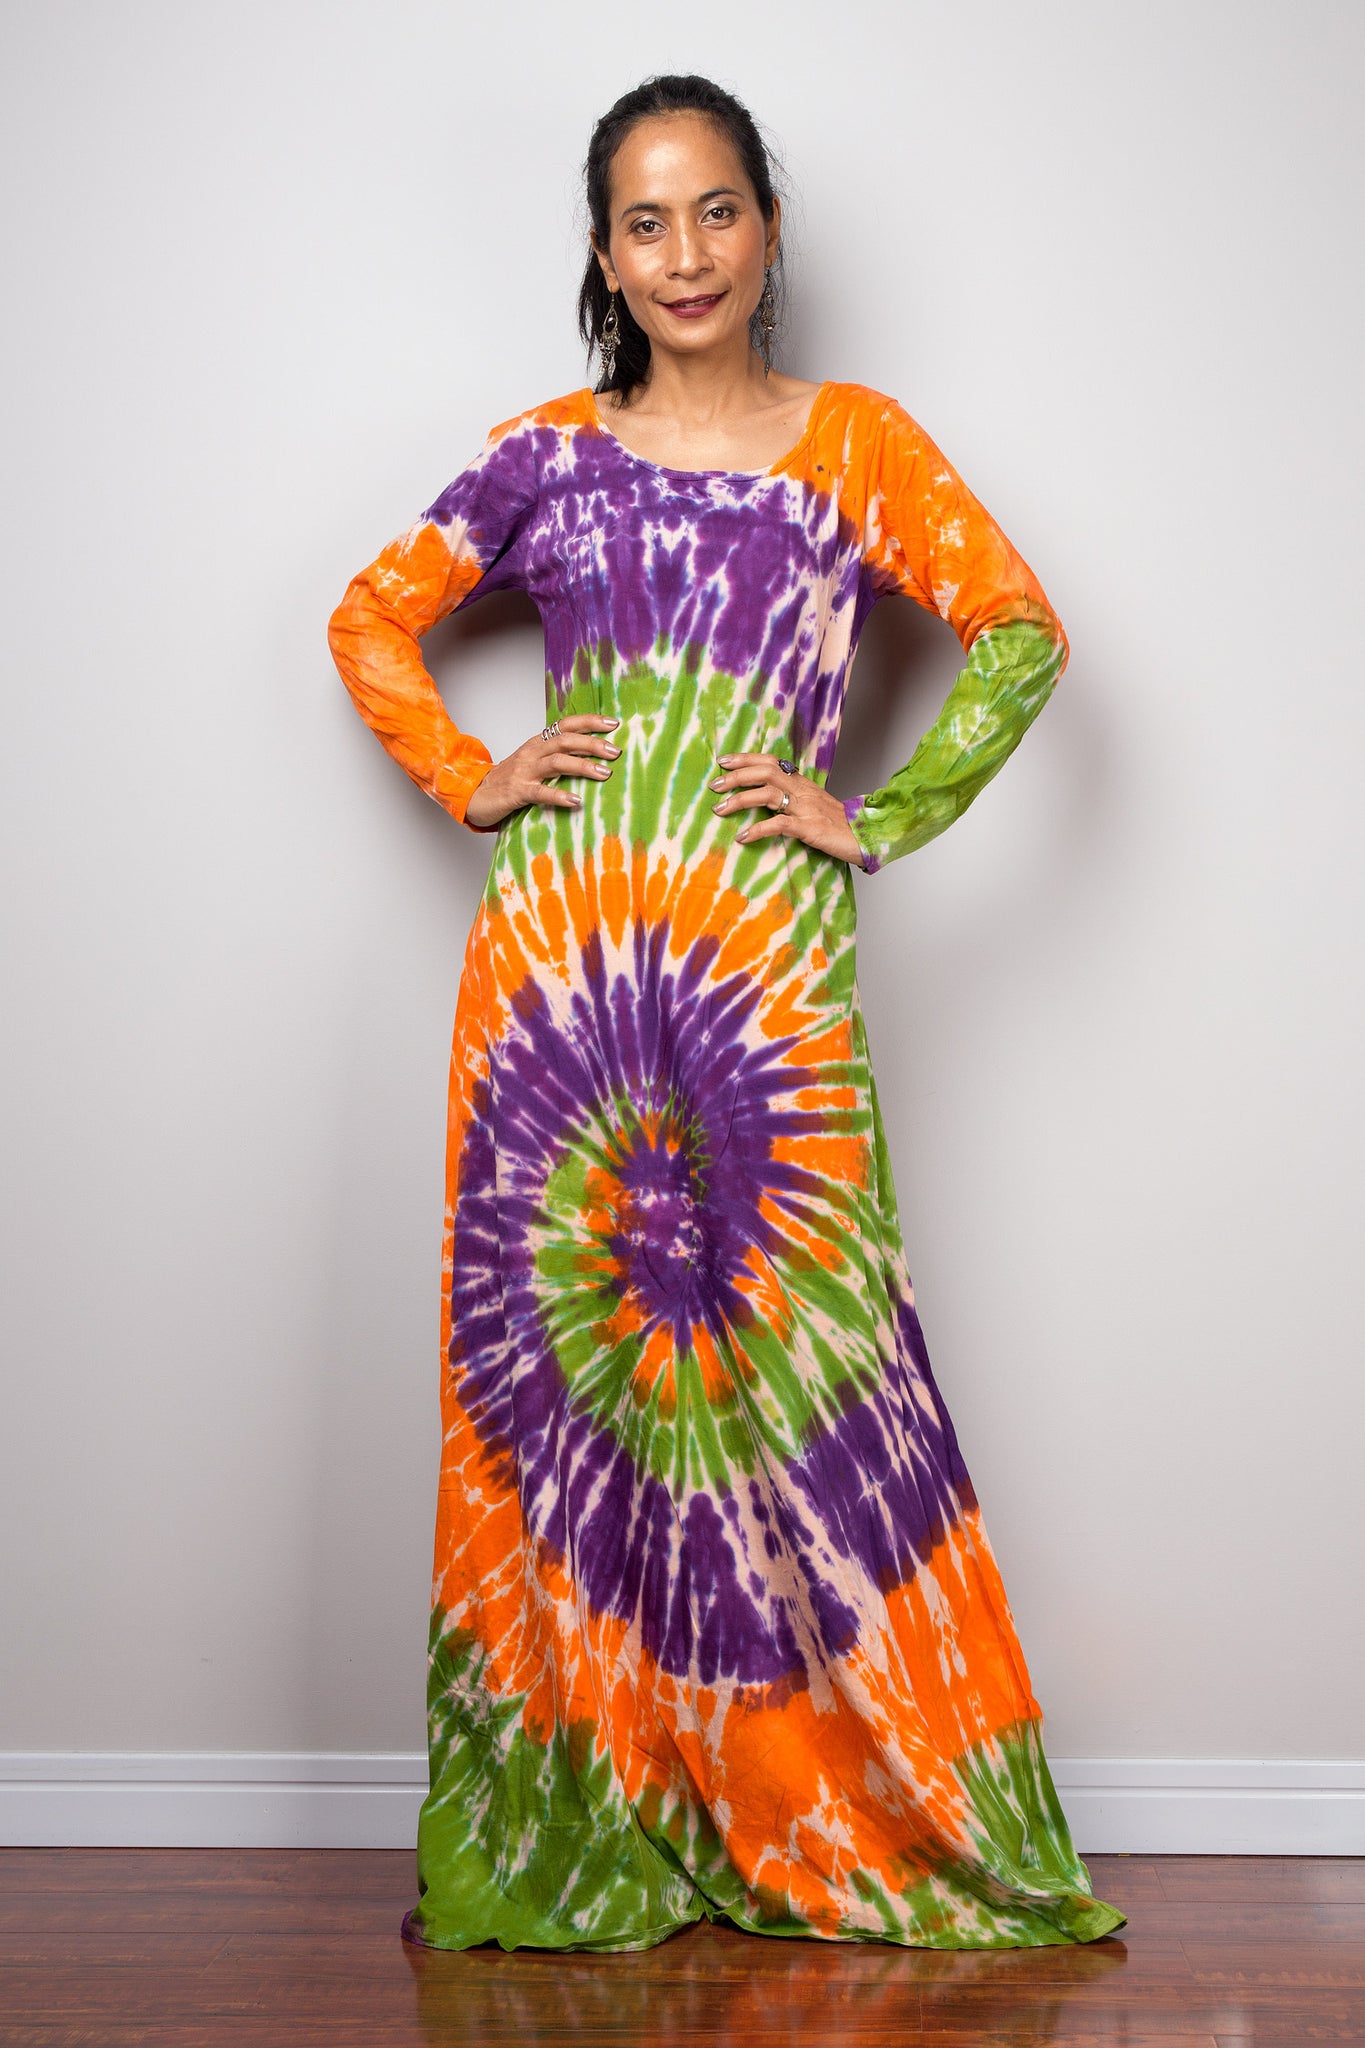 Tie dye swirl dress, Hippie Festival maxi dress, Long Sleeve Rainbow dress, Colourful gypsy dress